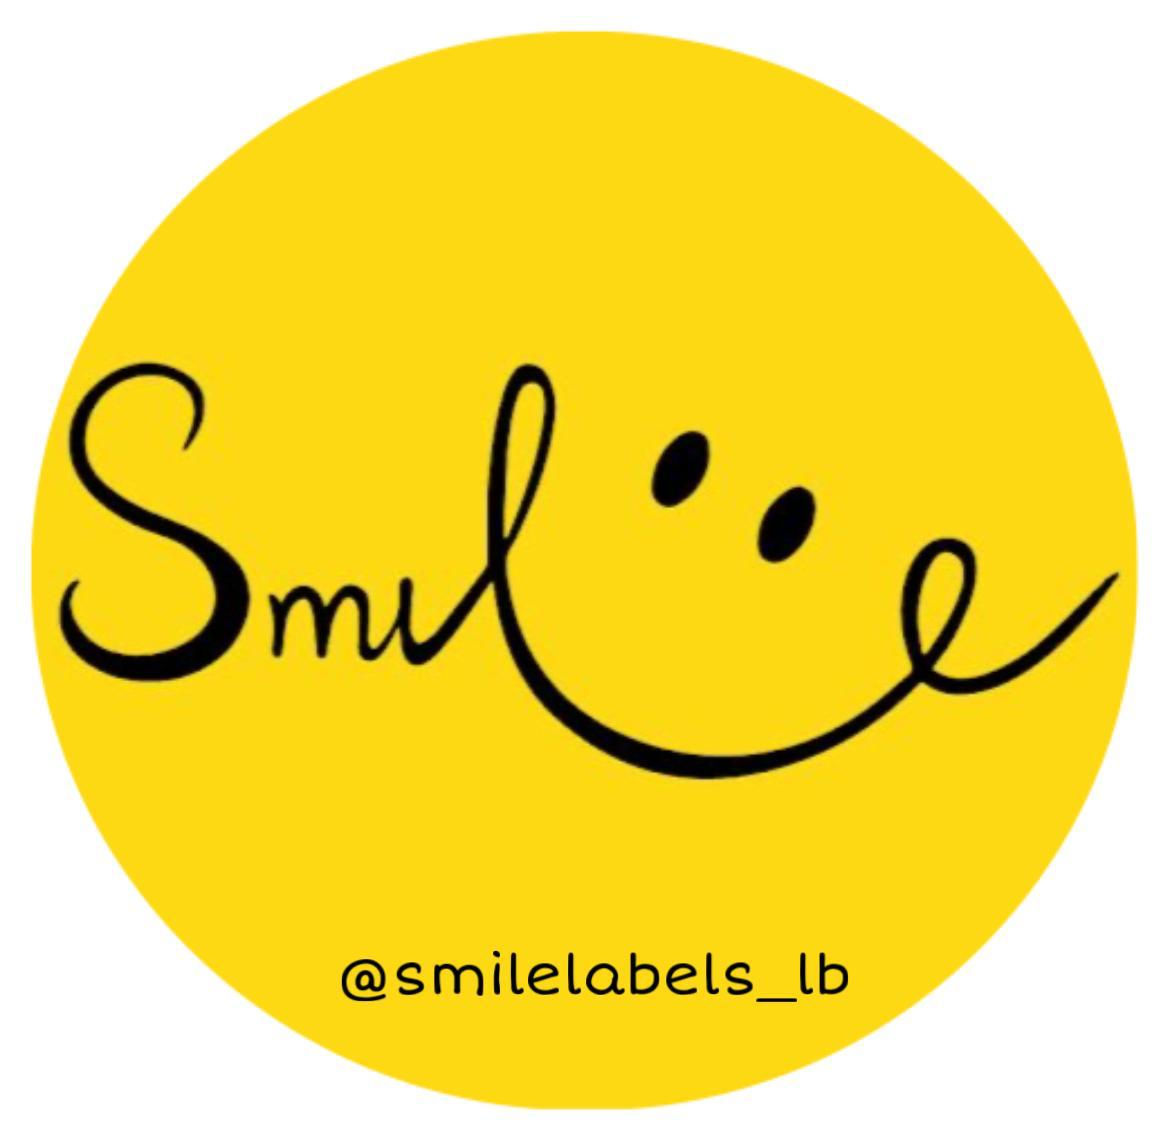 Smilelabels_lb